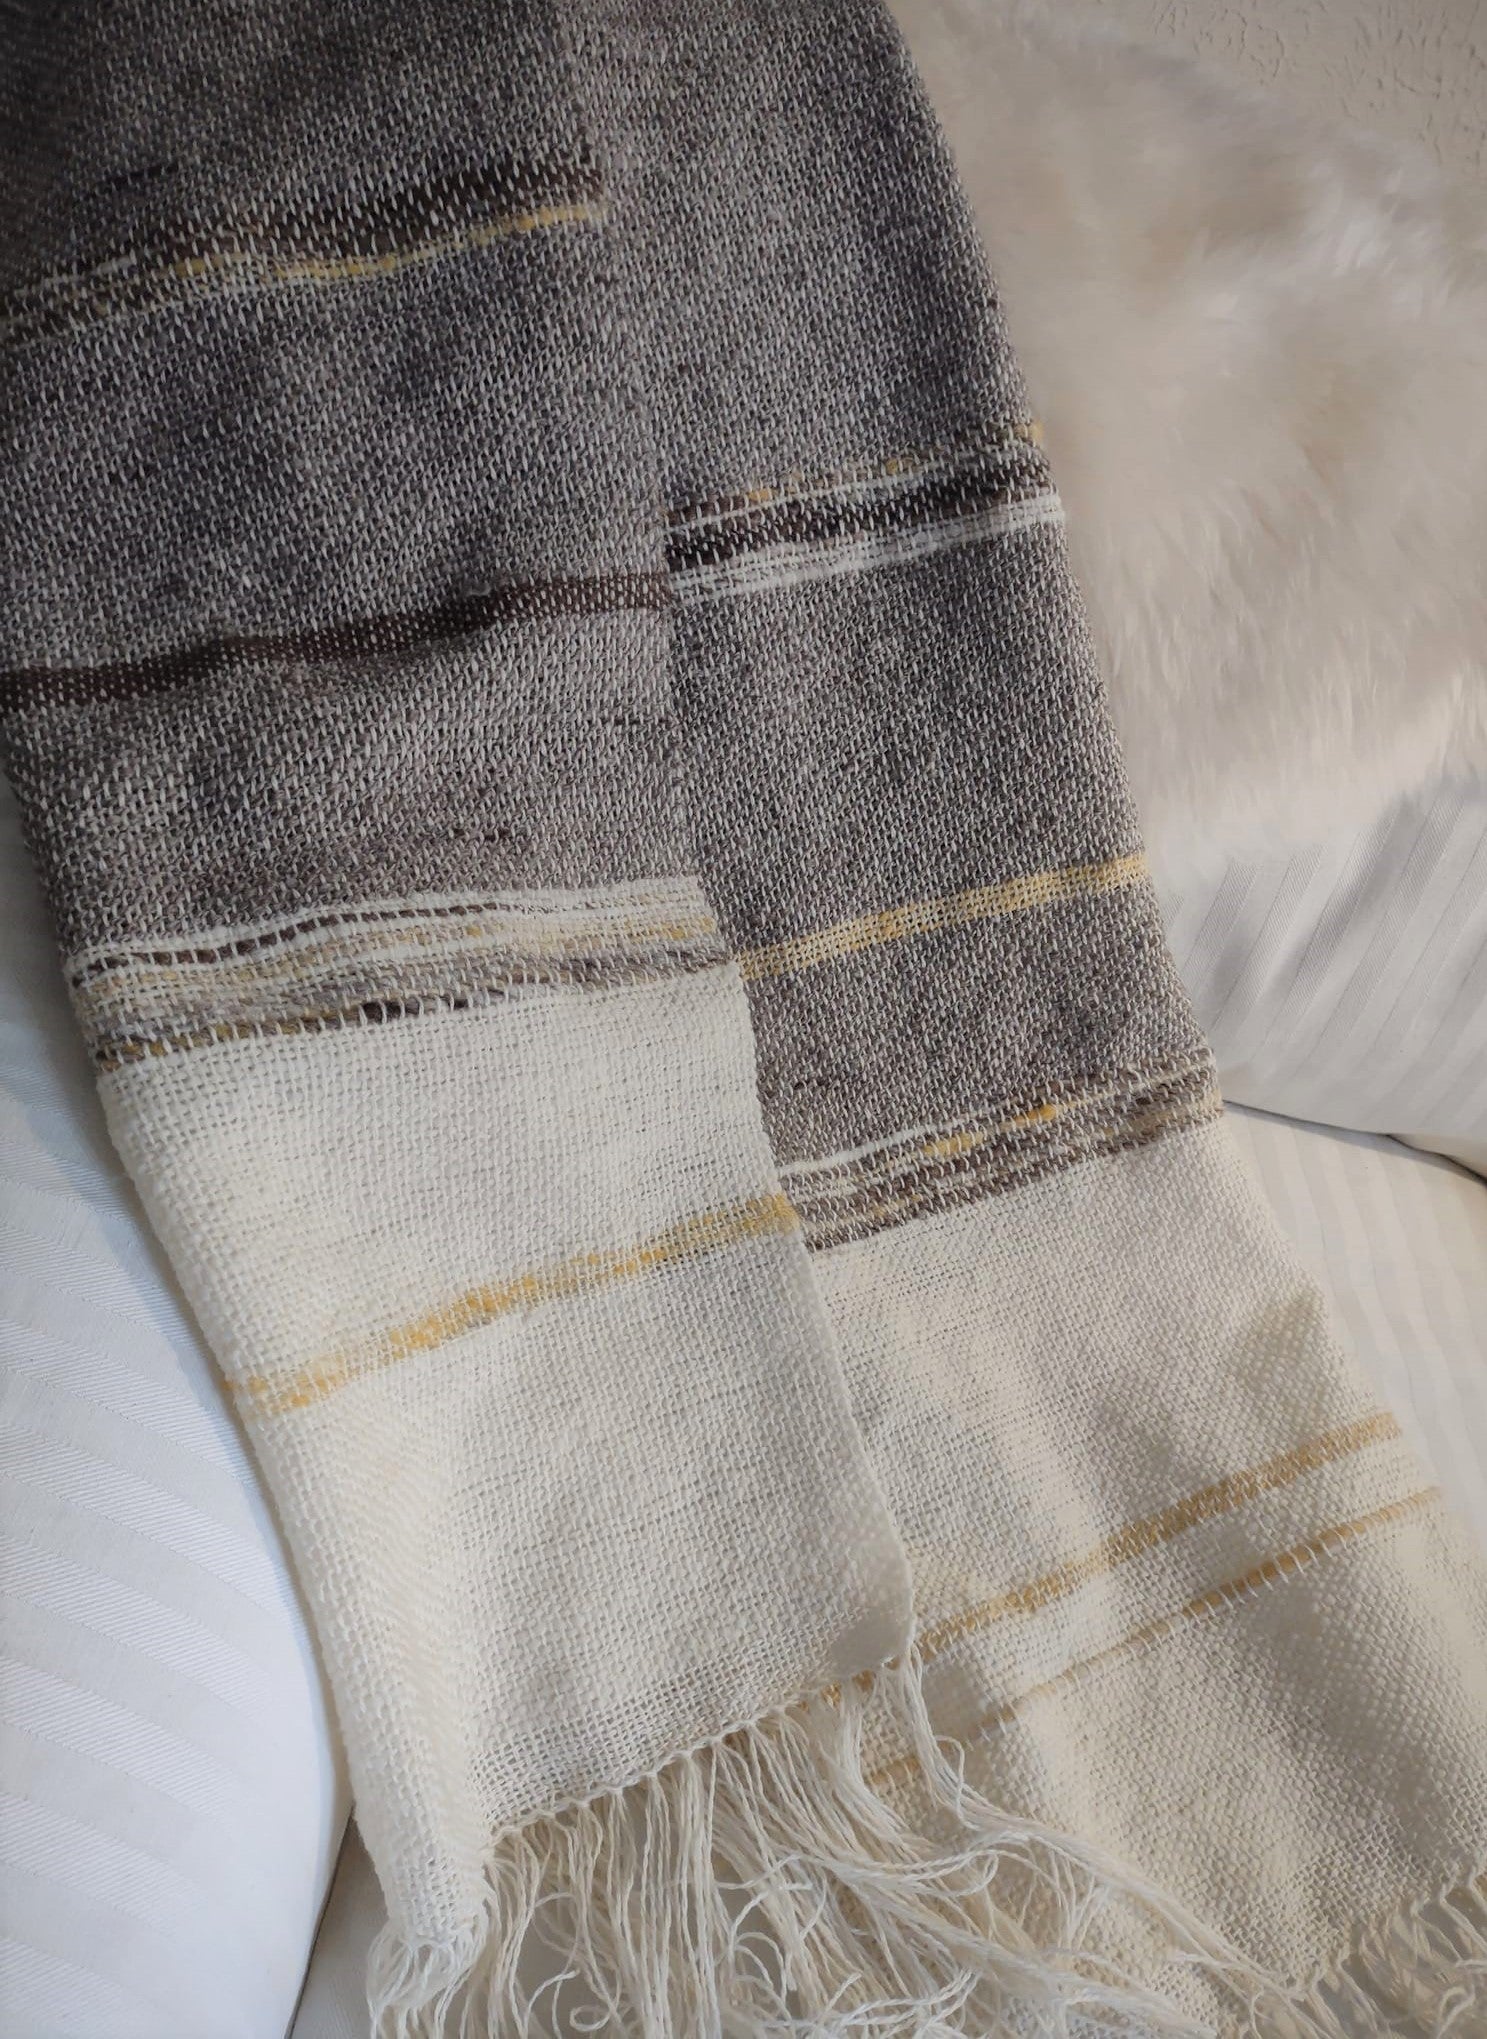 Handwoven shawl with handspun wool yarn: natural tones and a hint of honey yellow